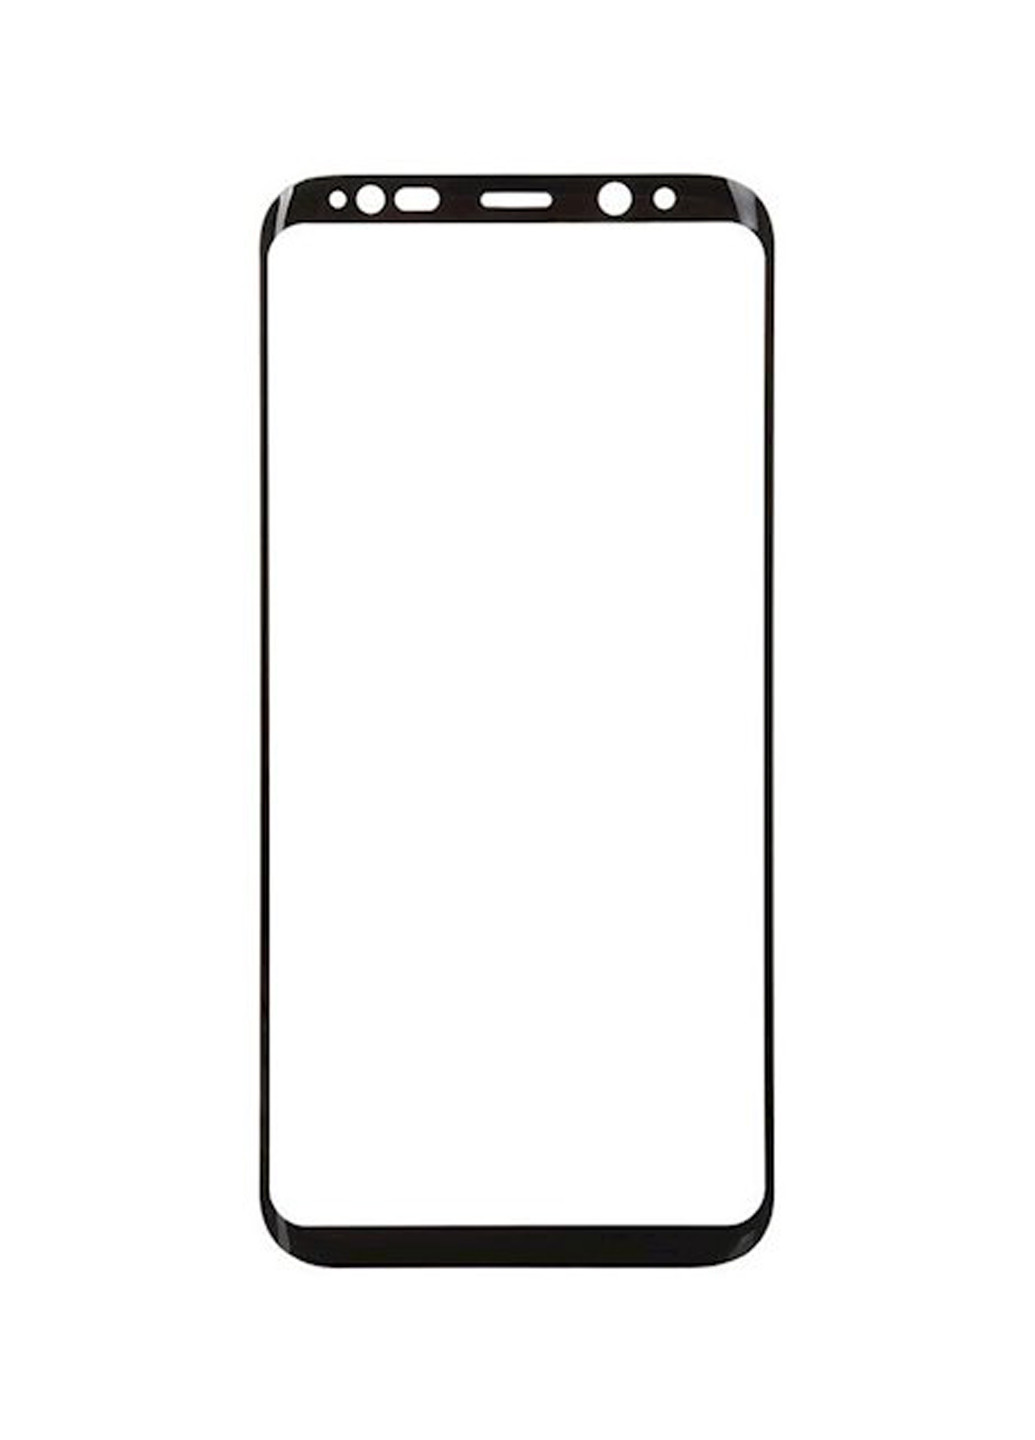 Захисна плівка Silk Screen Protector для Samsung Galaxy S8 + SM-G955 Black (702968) BeCover silk screen protector для samsung galaxy s8+ sm-g955 black (702968) (145252283)